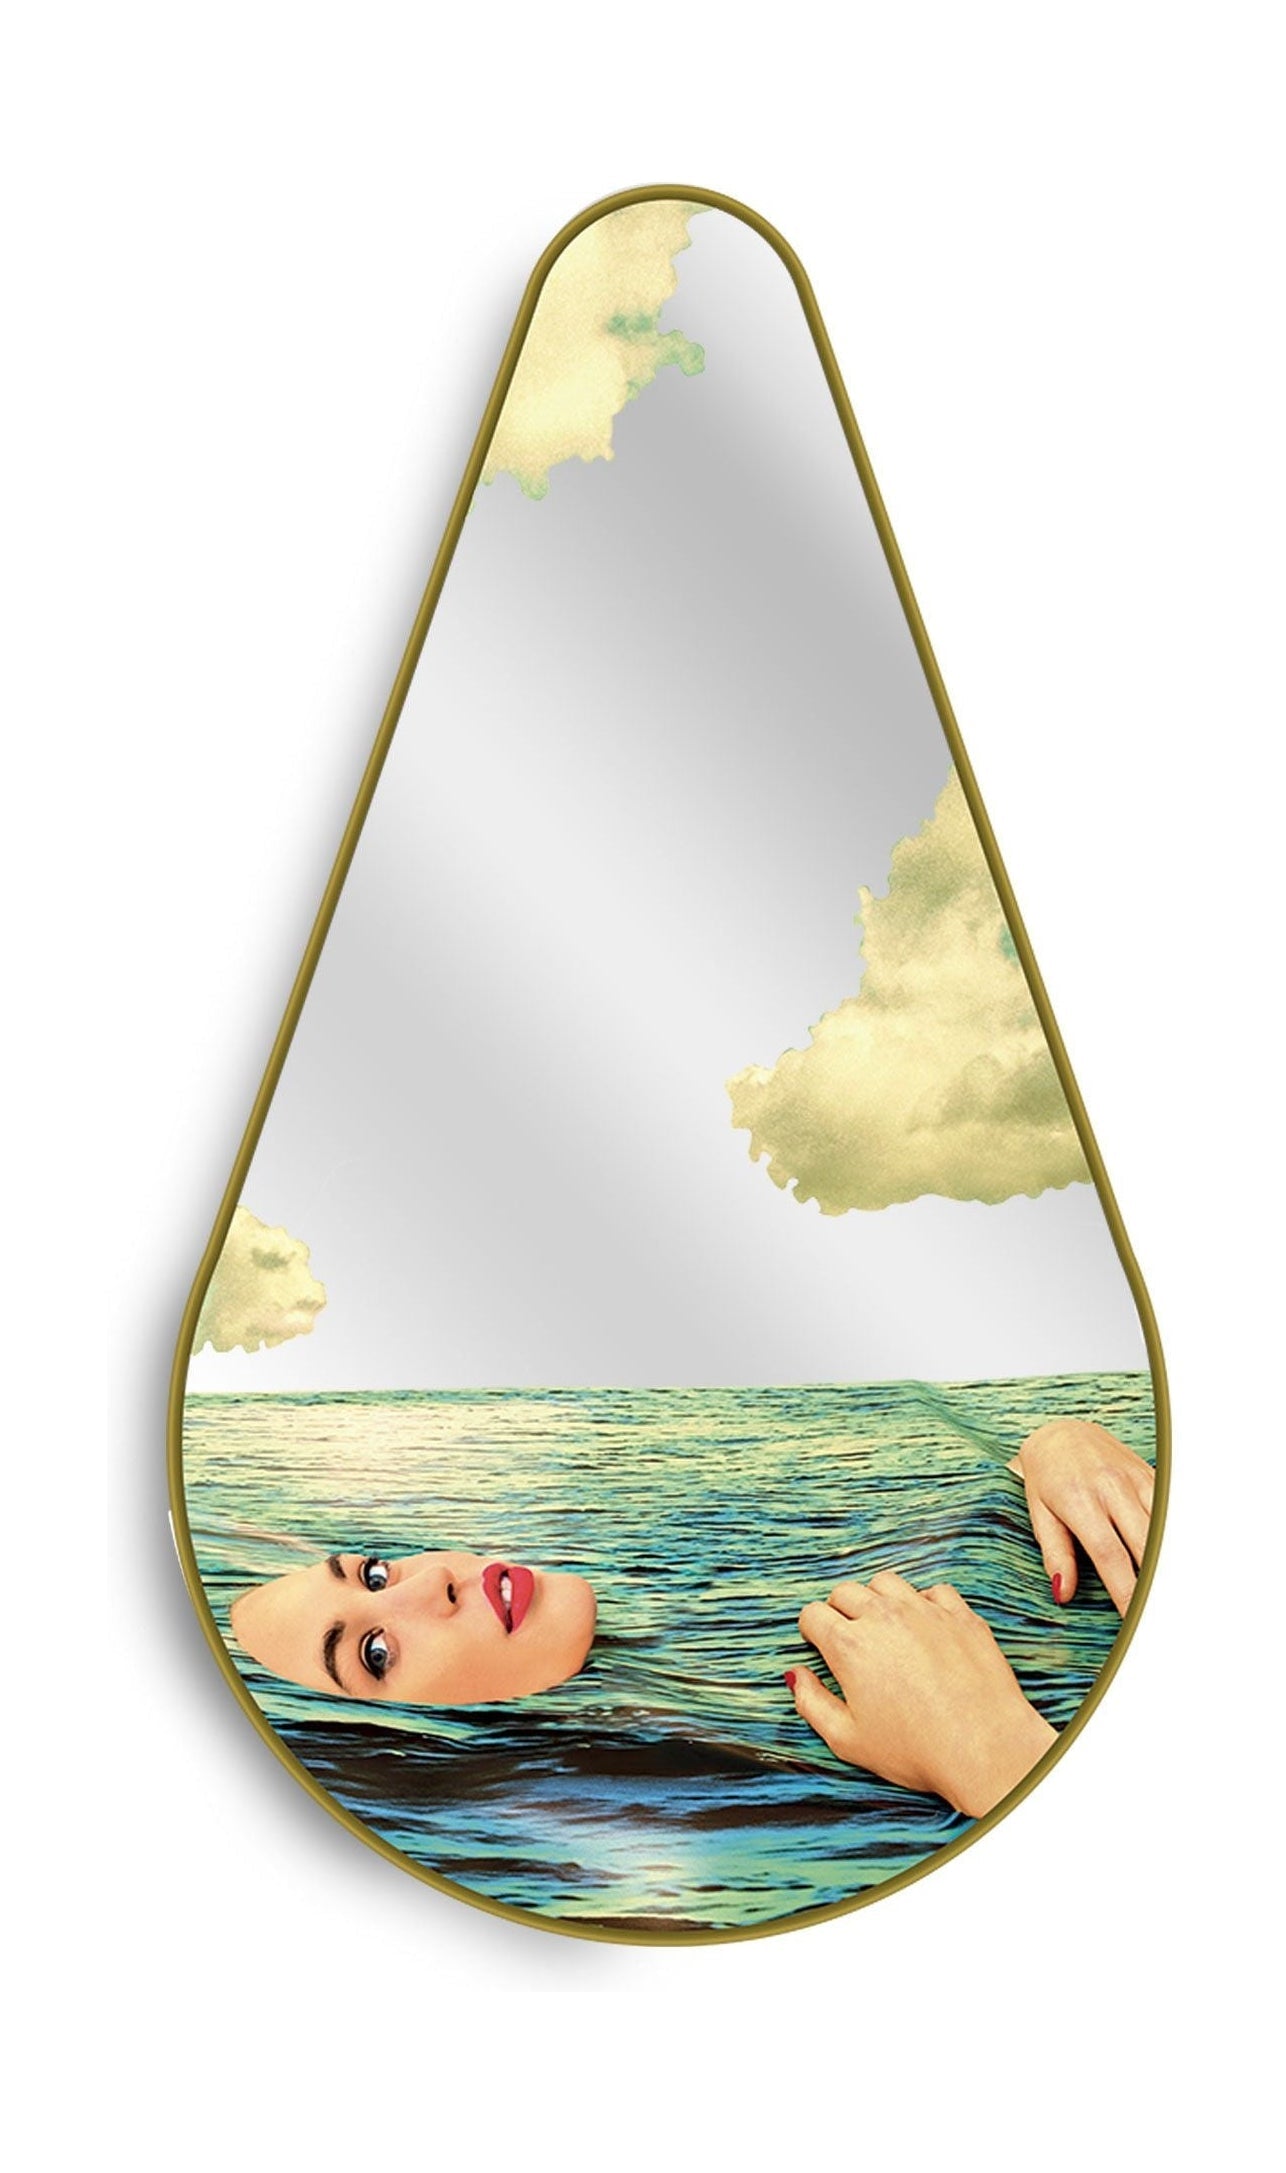 Selettipaper Mirror Gold Frame hruška, Seagirl